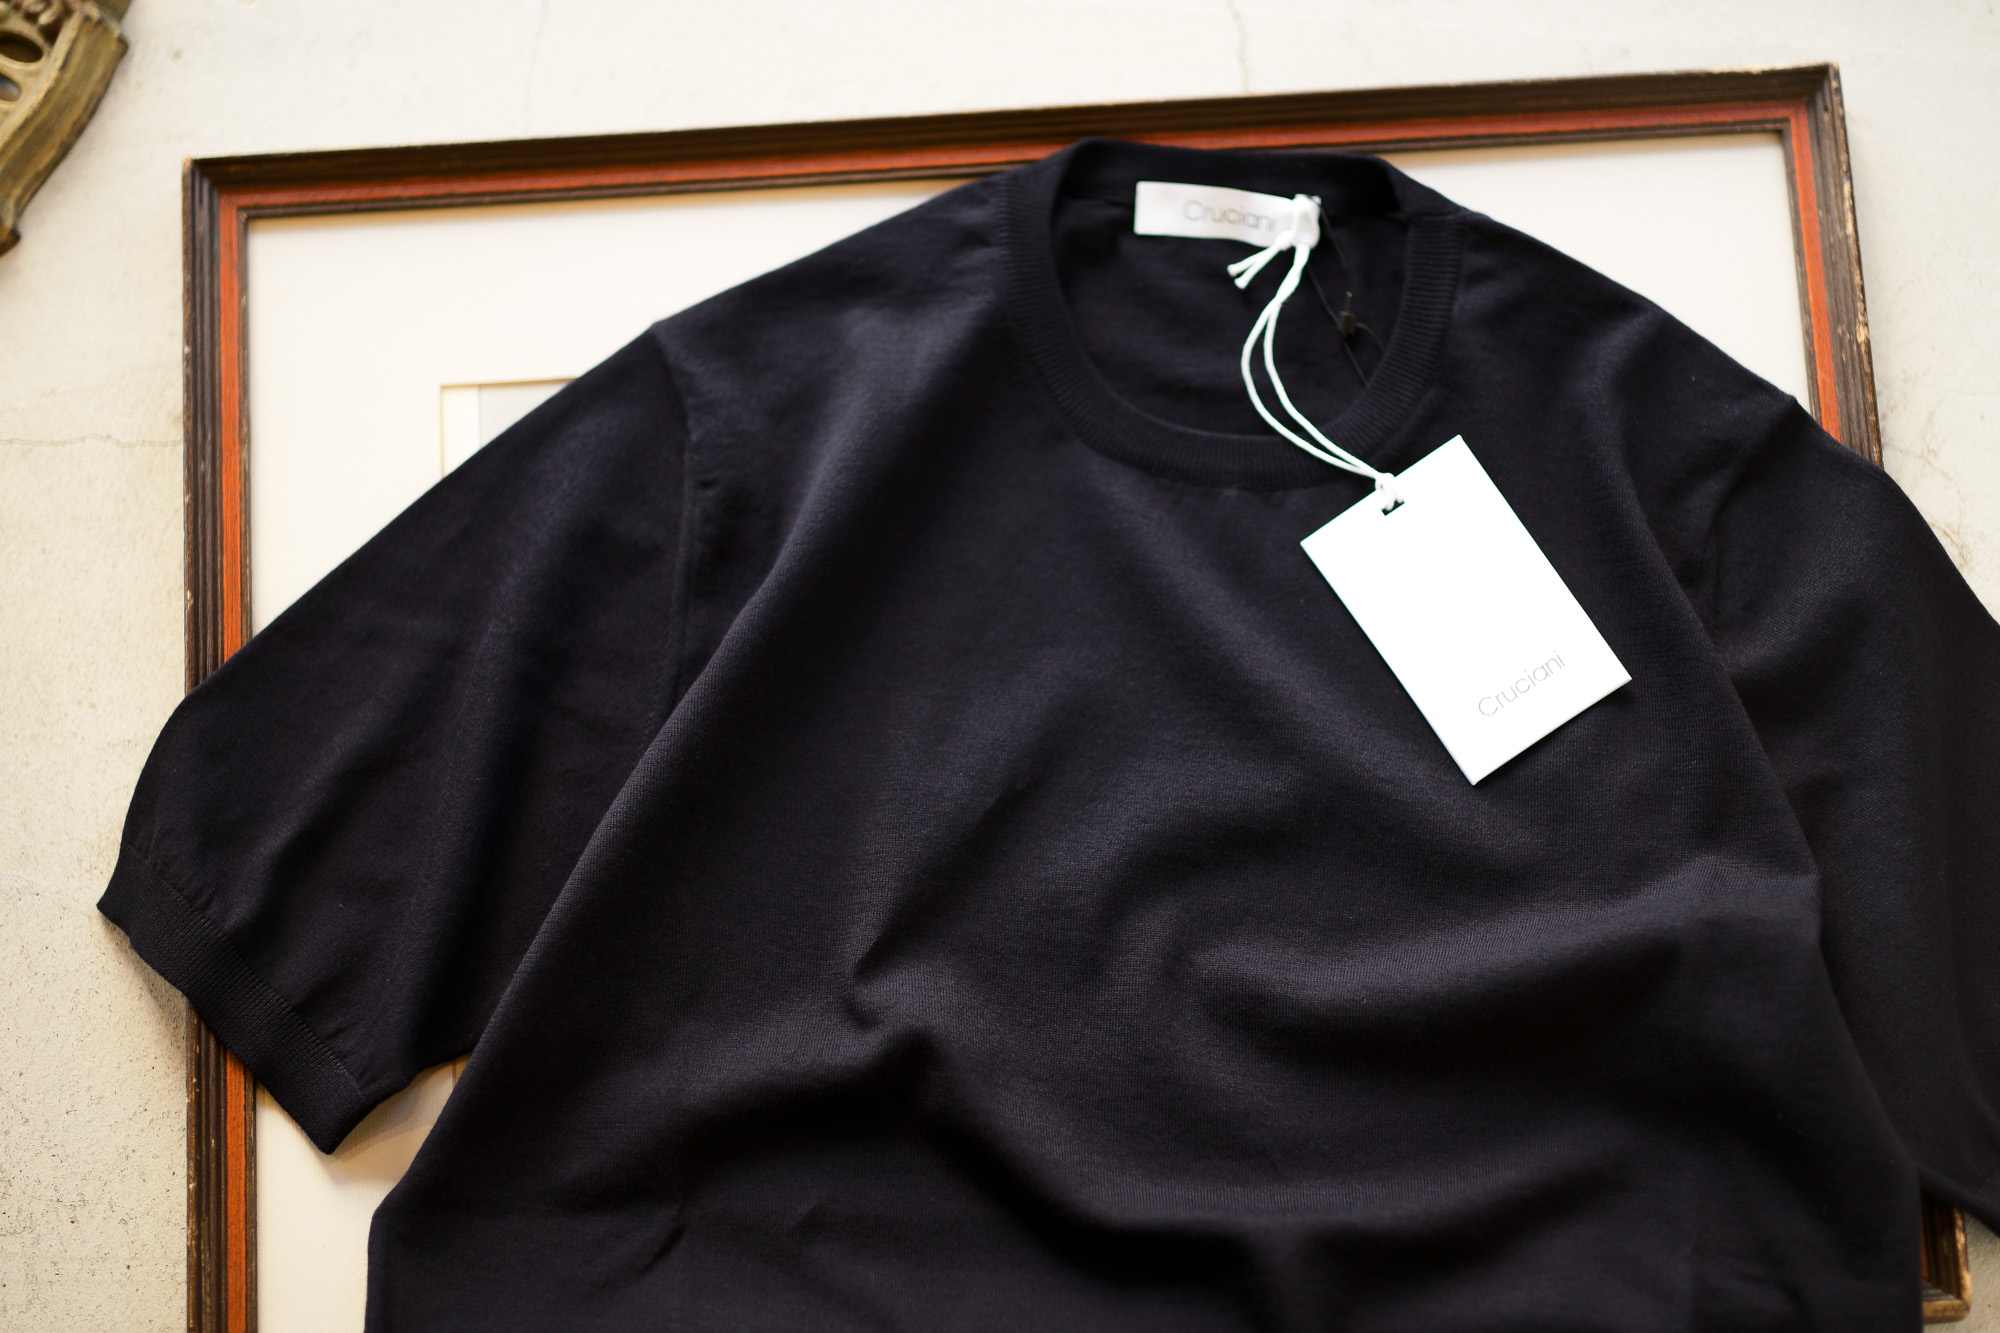 Cruciani(クルチアーニ) 33G Knit T-shirt 33ゲージ コットン ニット Tシャツ NAVY (ネイビー・Z0064)  made in italy (イタリア製) 2020 春夏新作 愛知 名古屋 altoediritto アルトエデリット ニットTEE